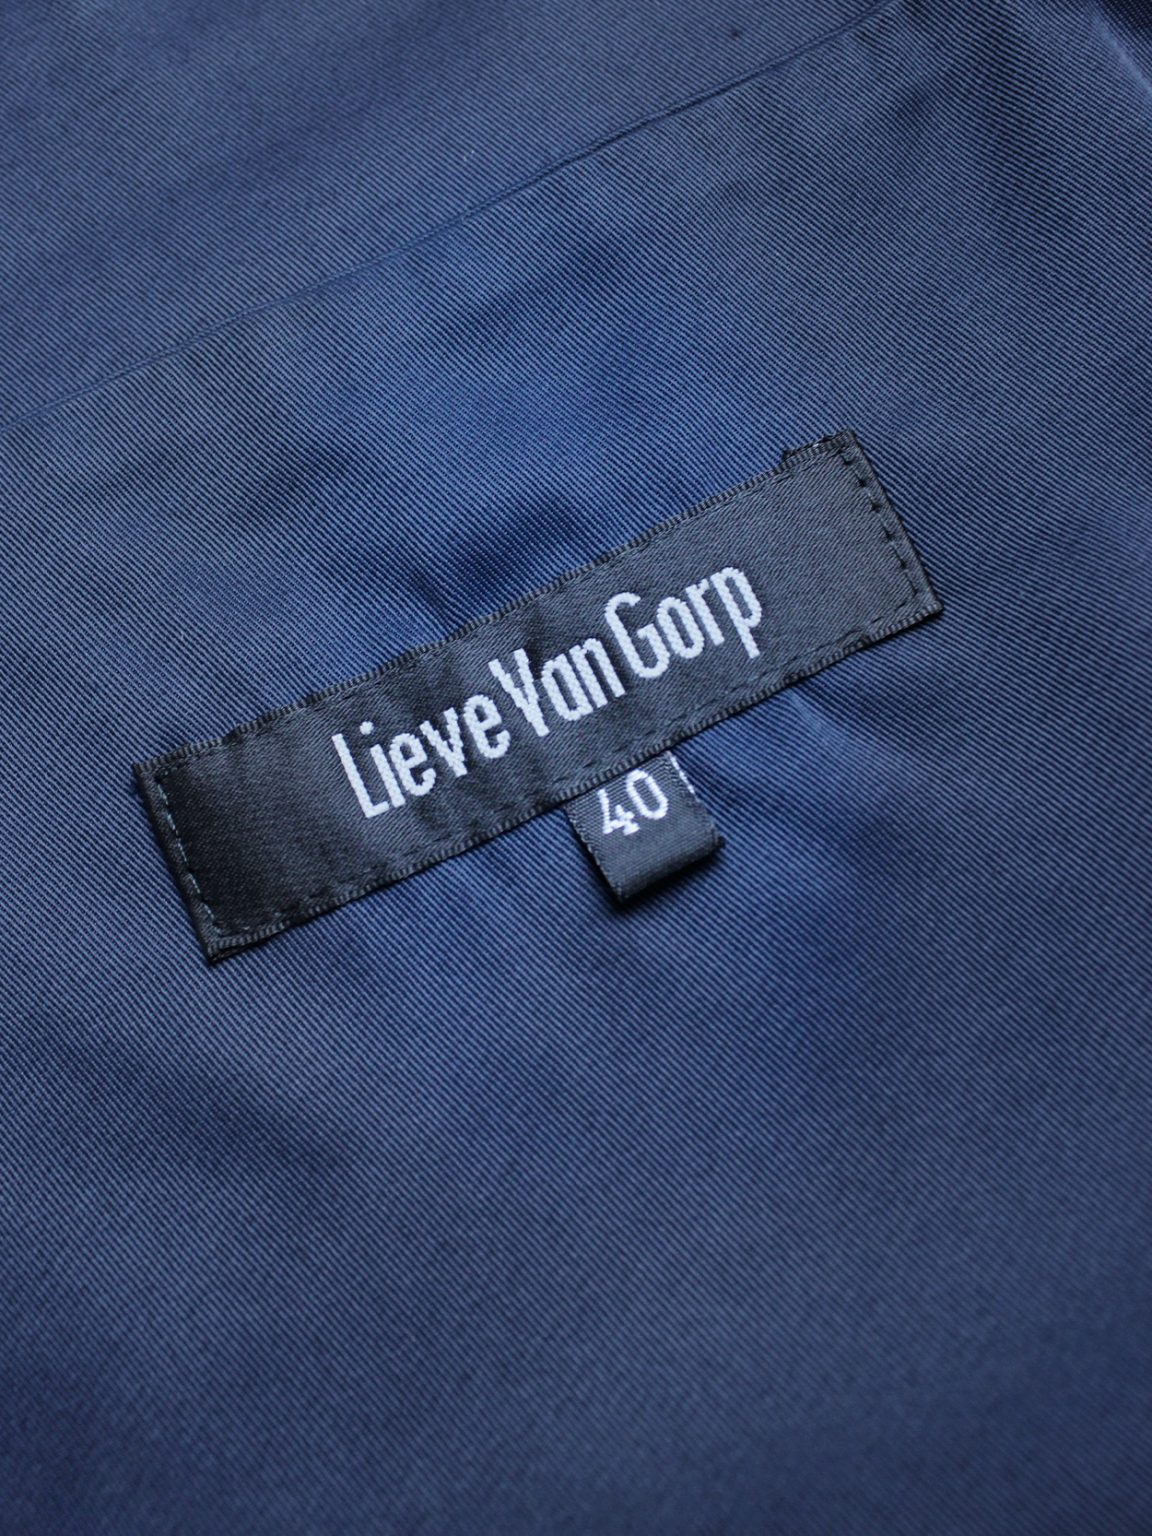 Lieve van gorp dark blue cropped apron with bowtie back — 1990's